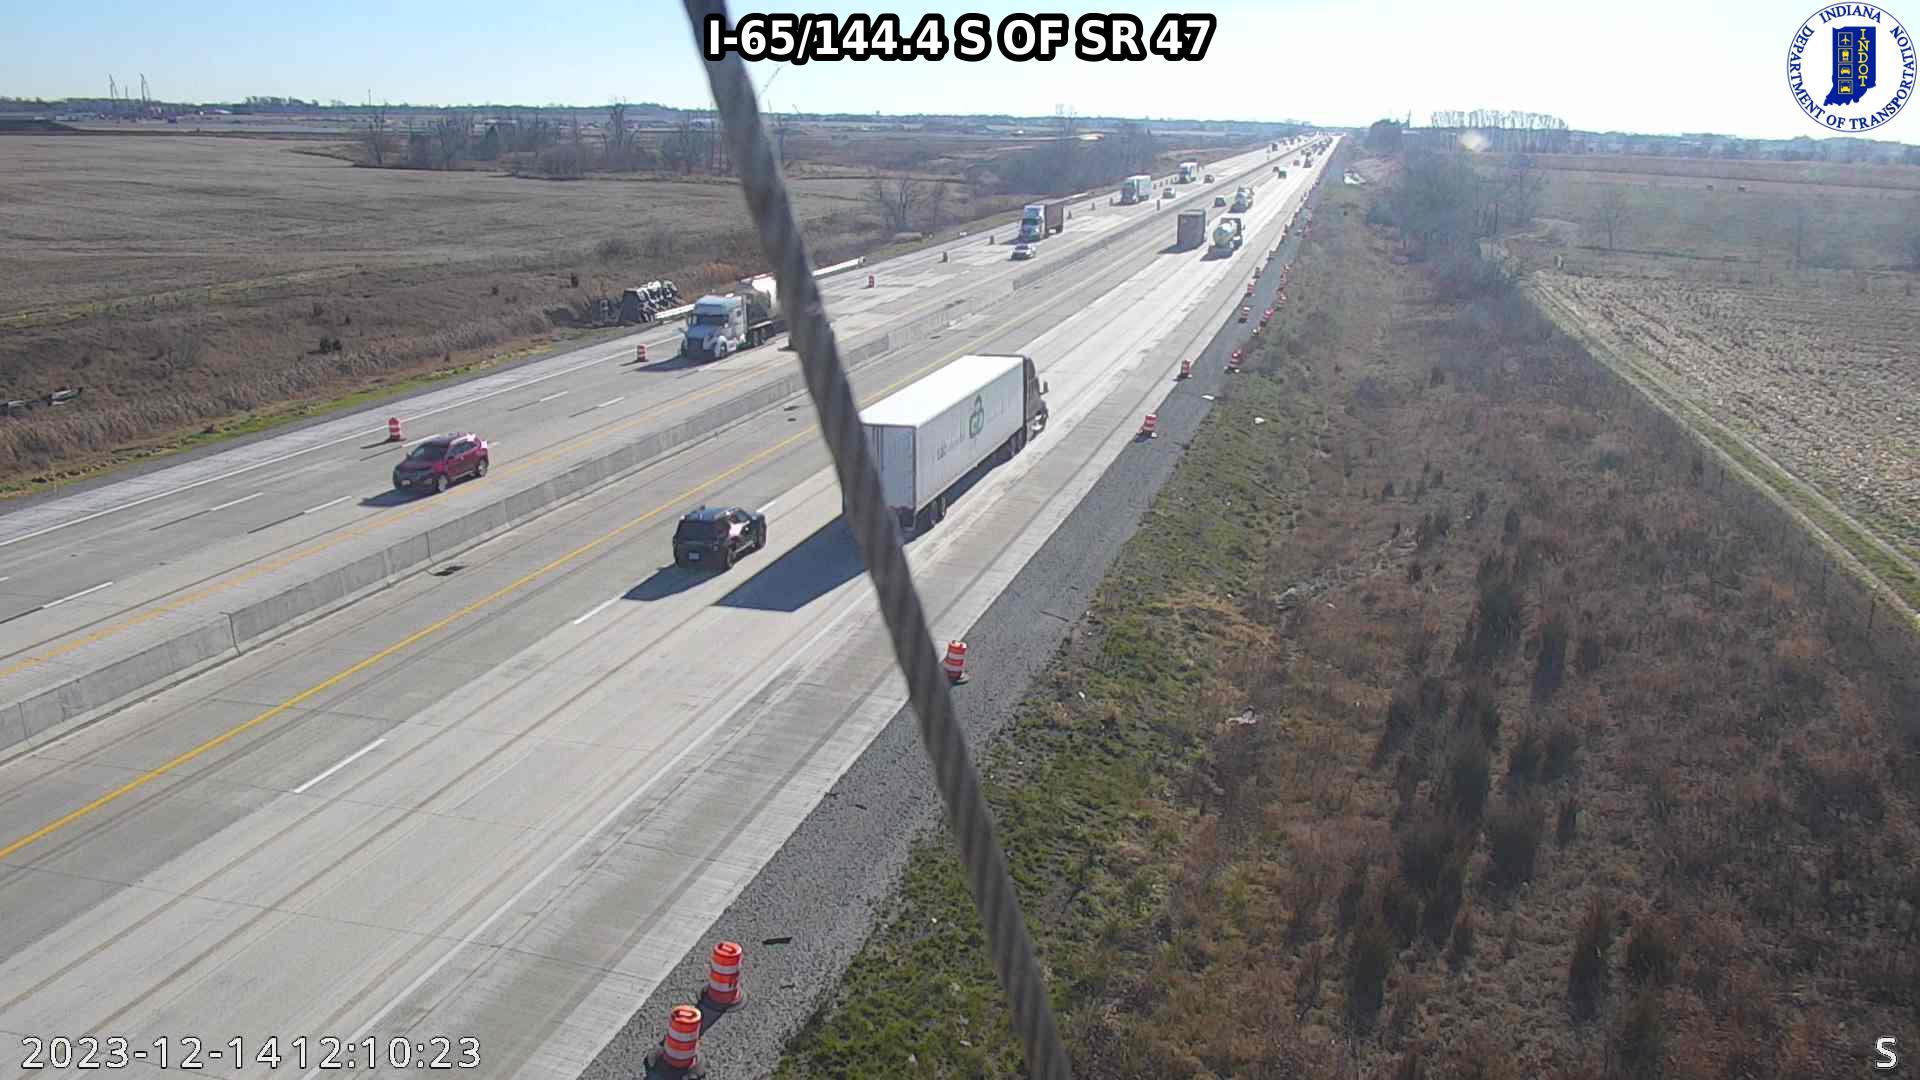 Pike: I-65: I-65/144.4 S OF SR Traffic Camera